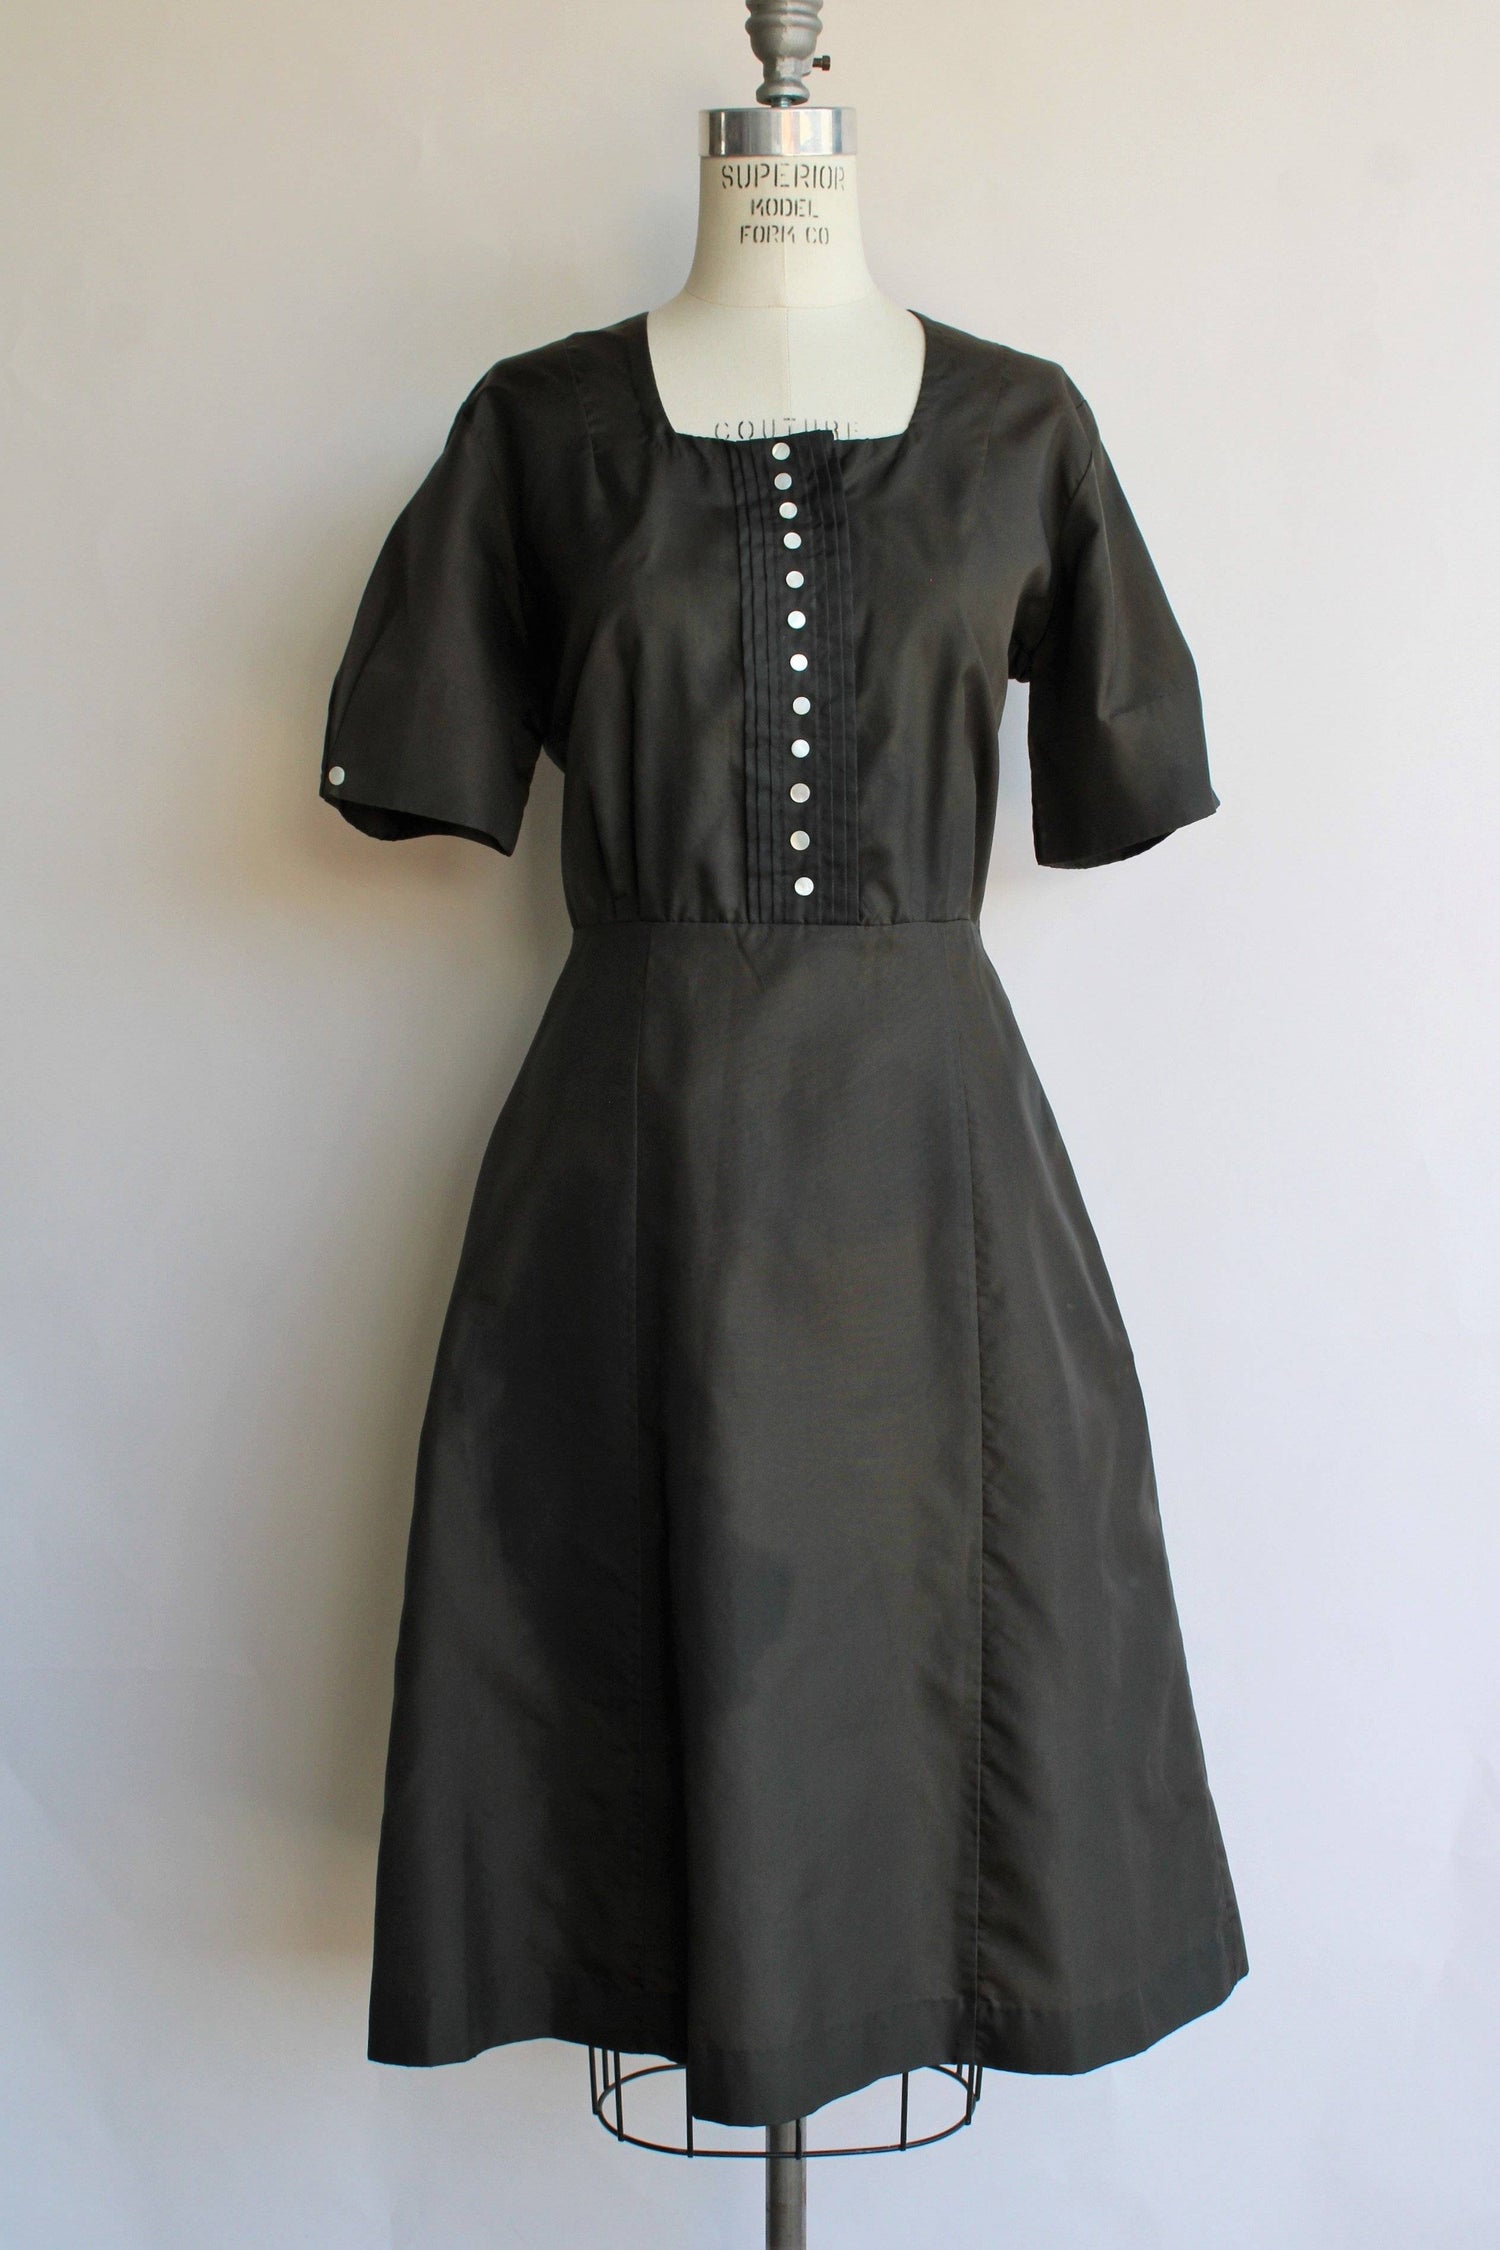 Vintage 1940s Uniform Dress in a Shirtwaist Style – Toadstool Farm Vintage